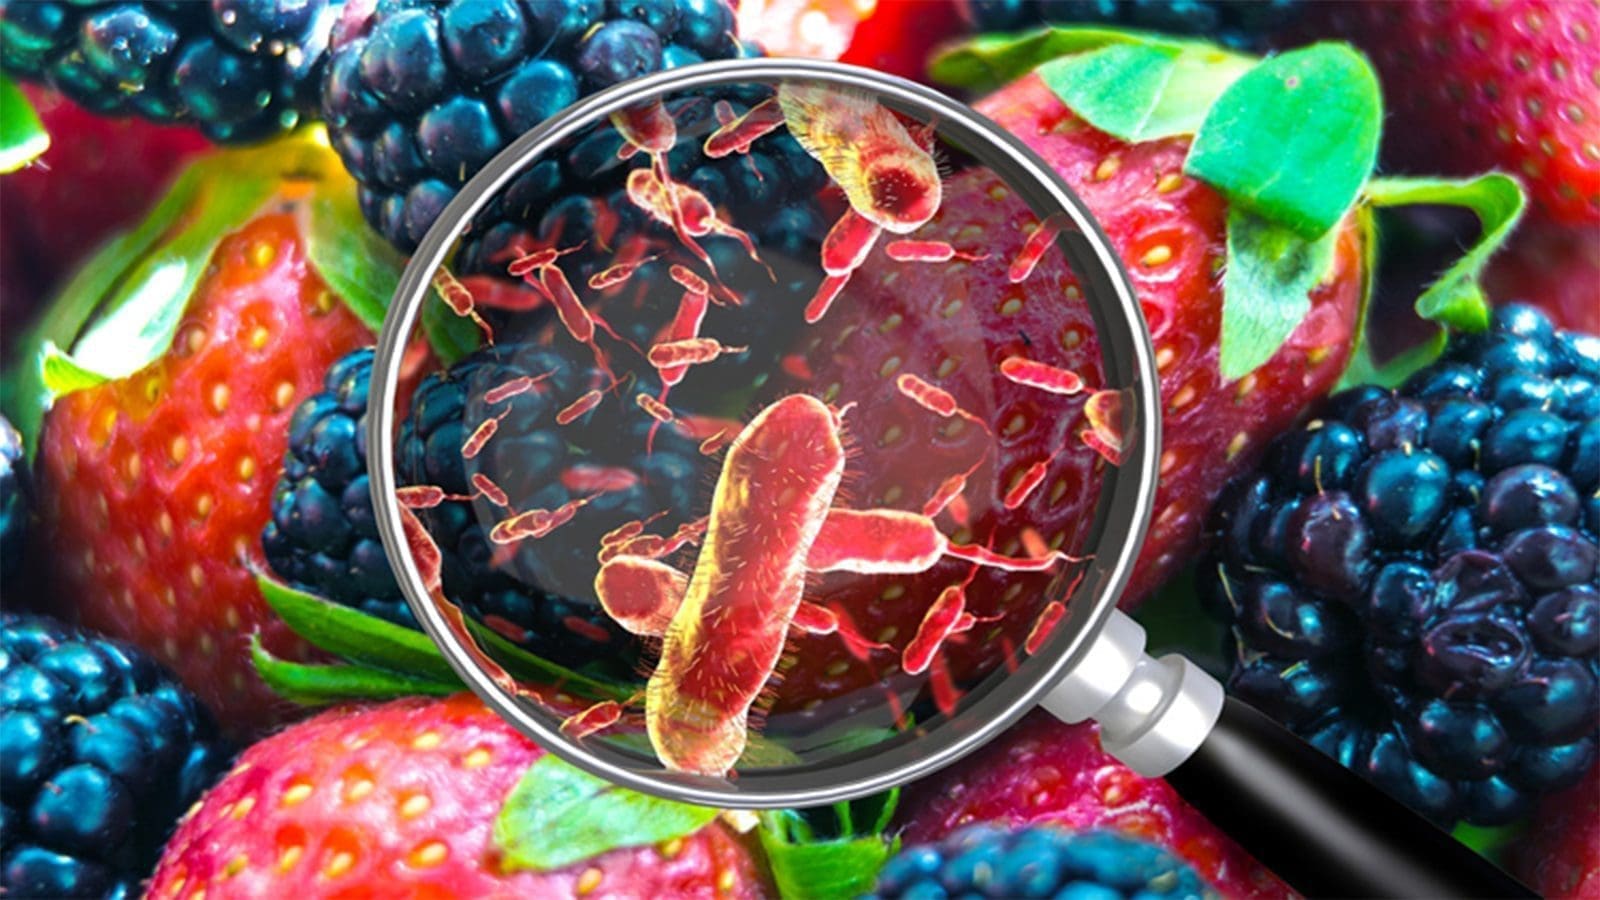 Researchers create model to calculate economic impact of foodborne illness